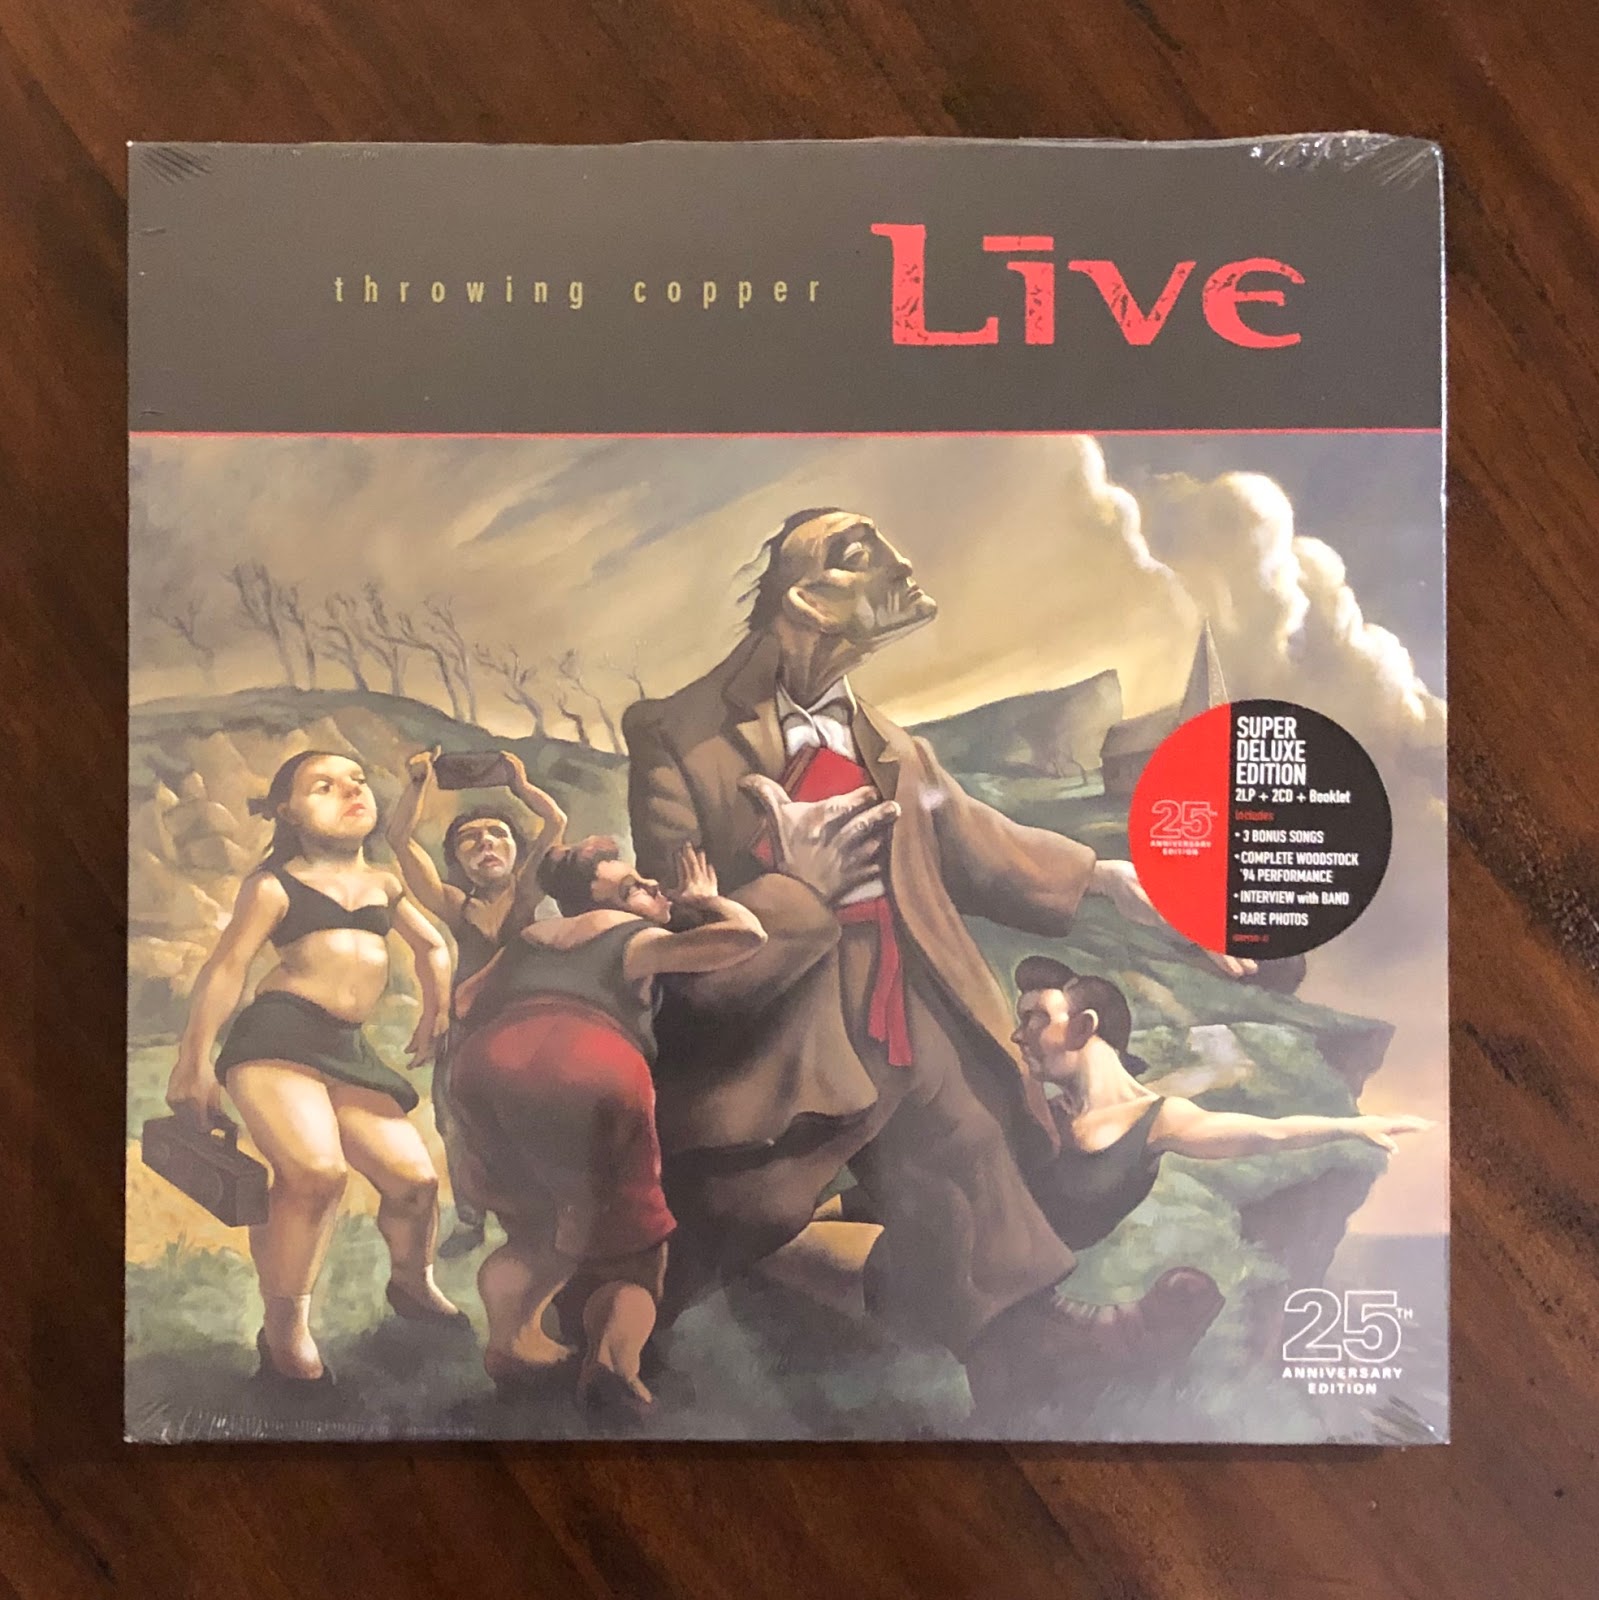 So-Called Soundtrack: Live – Copper [25th Reissue] (Album Review)